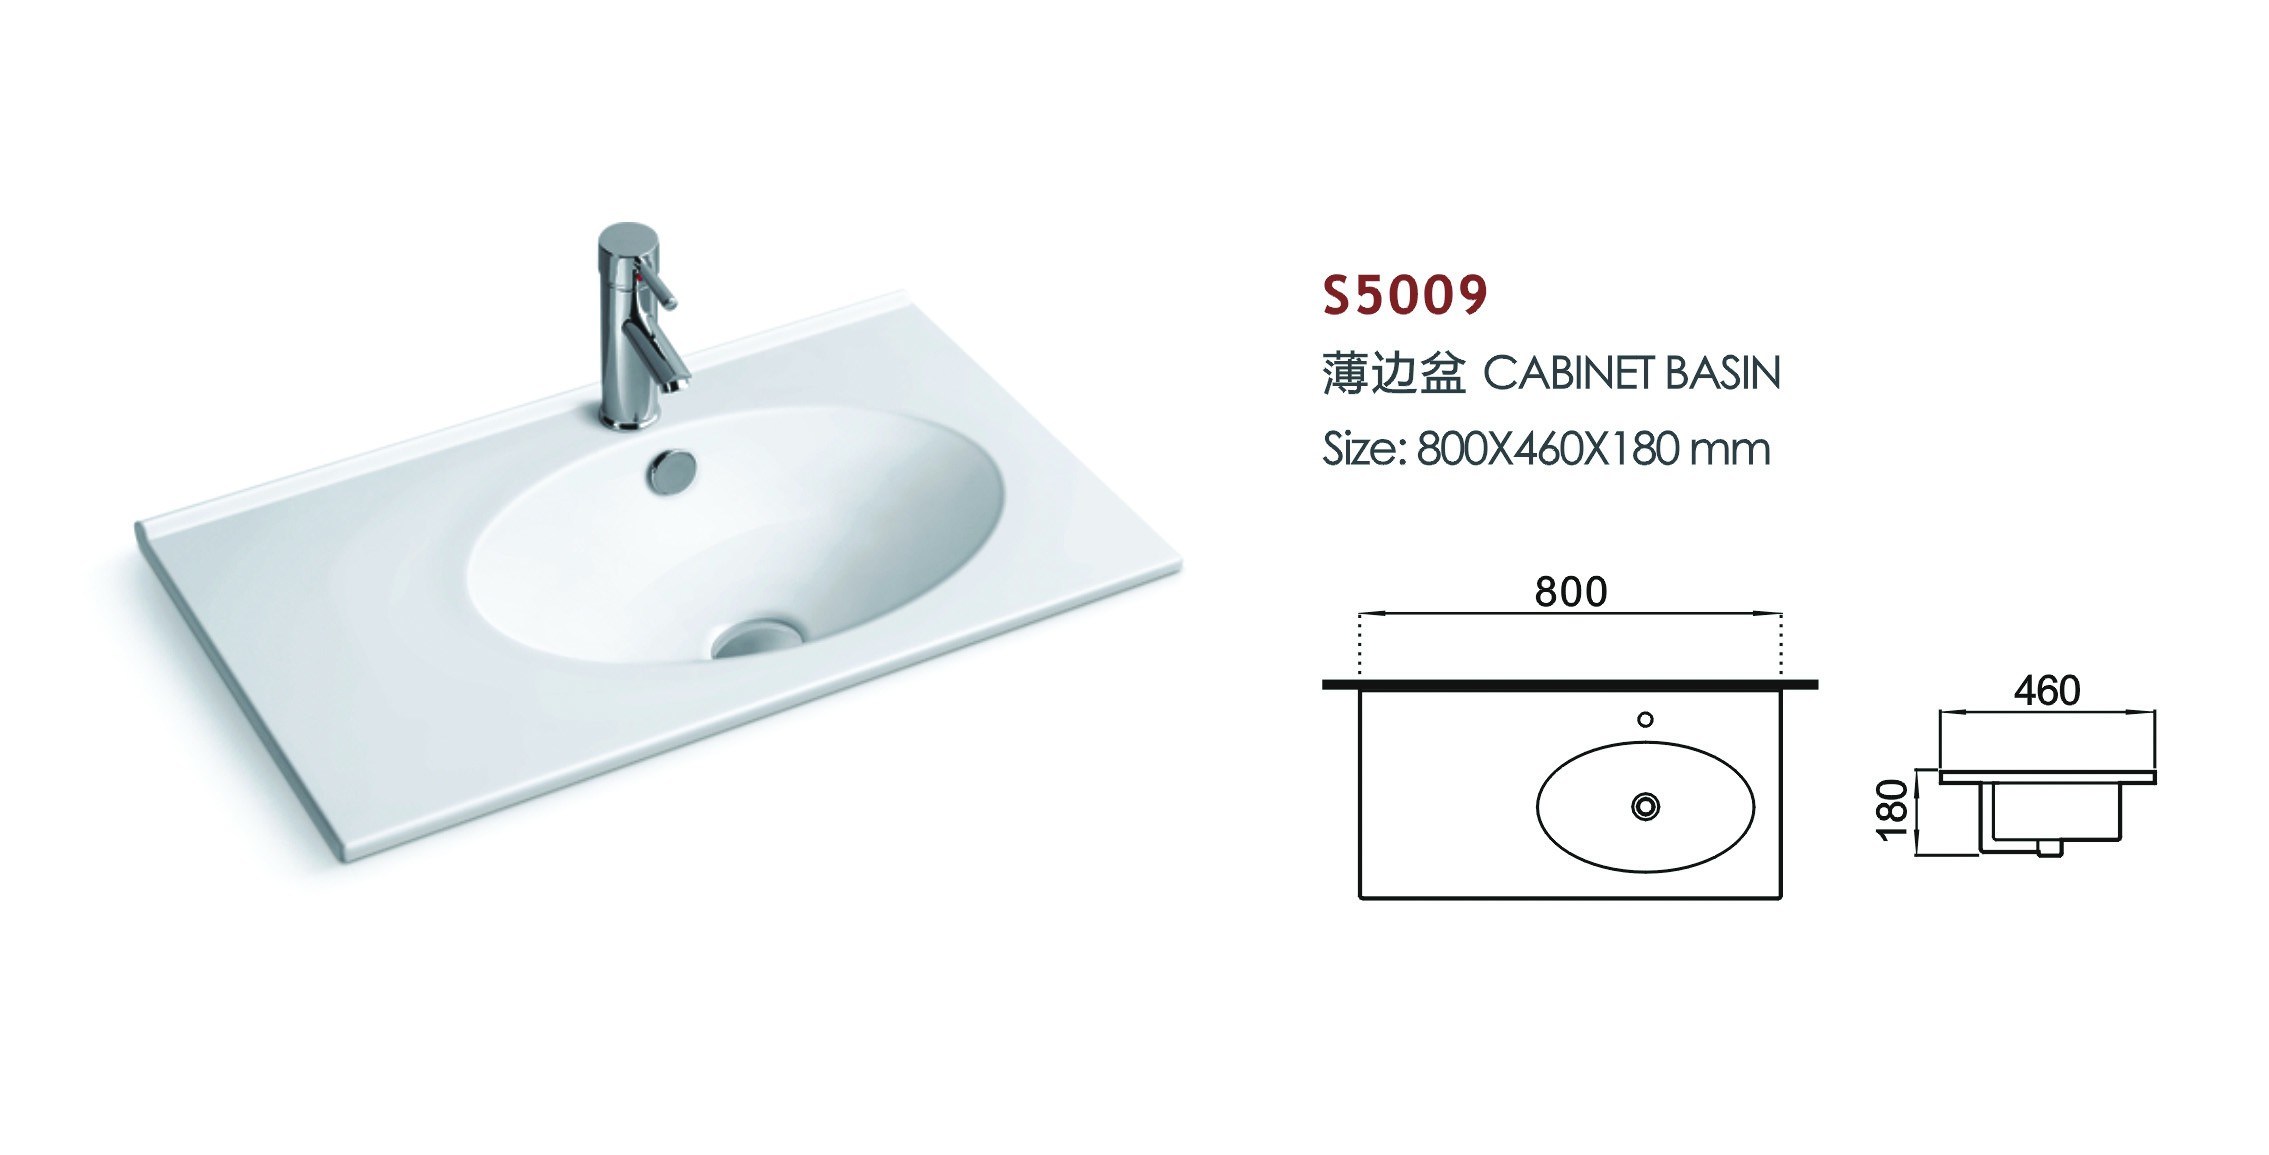 Cheap Ceramic Bathroom Vessel Sink in Foshan (S5009)